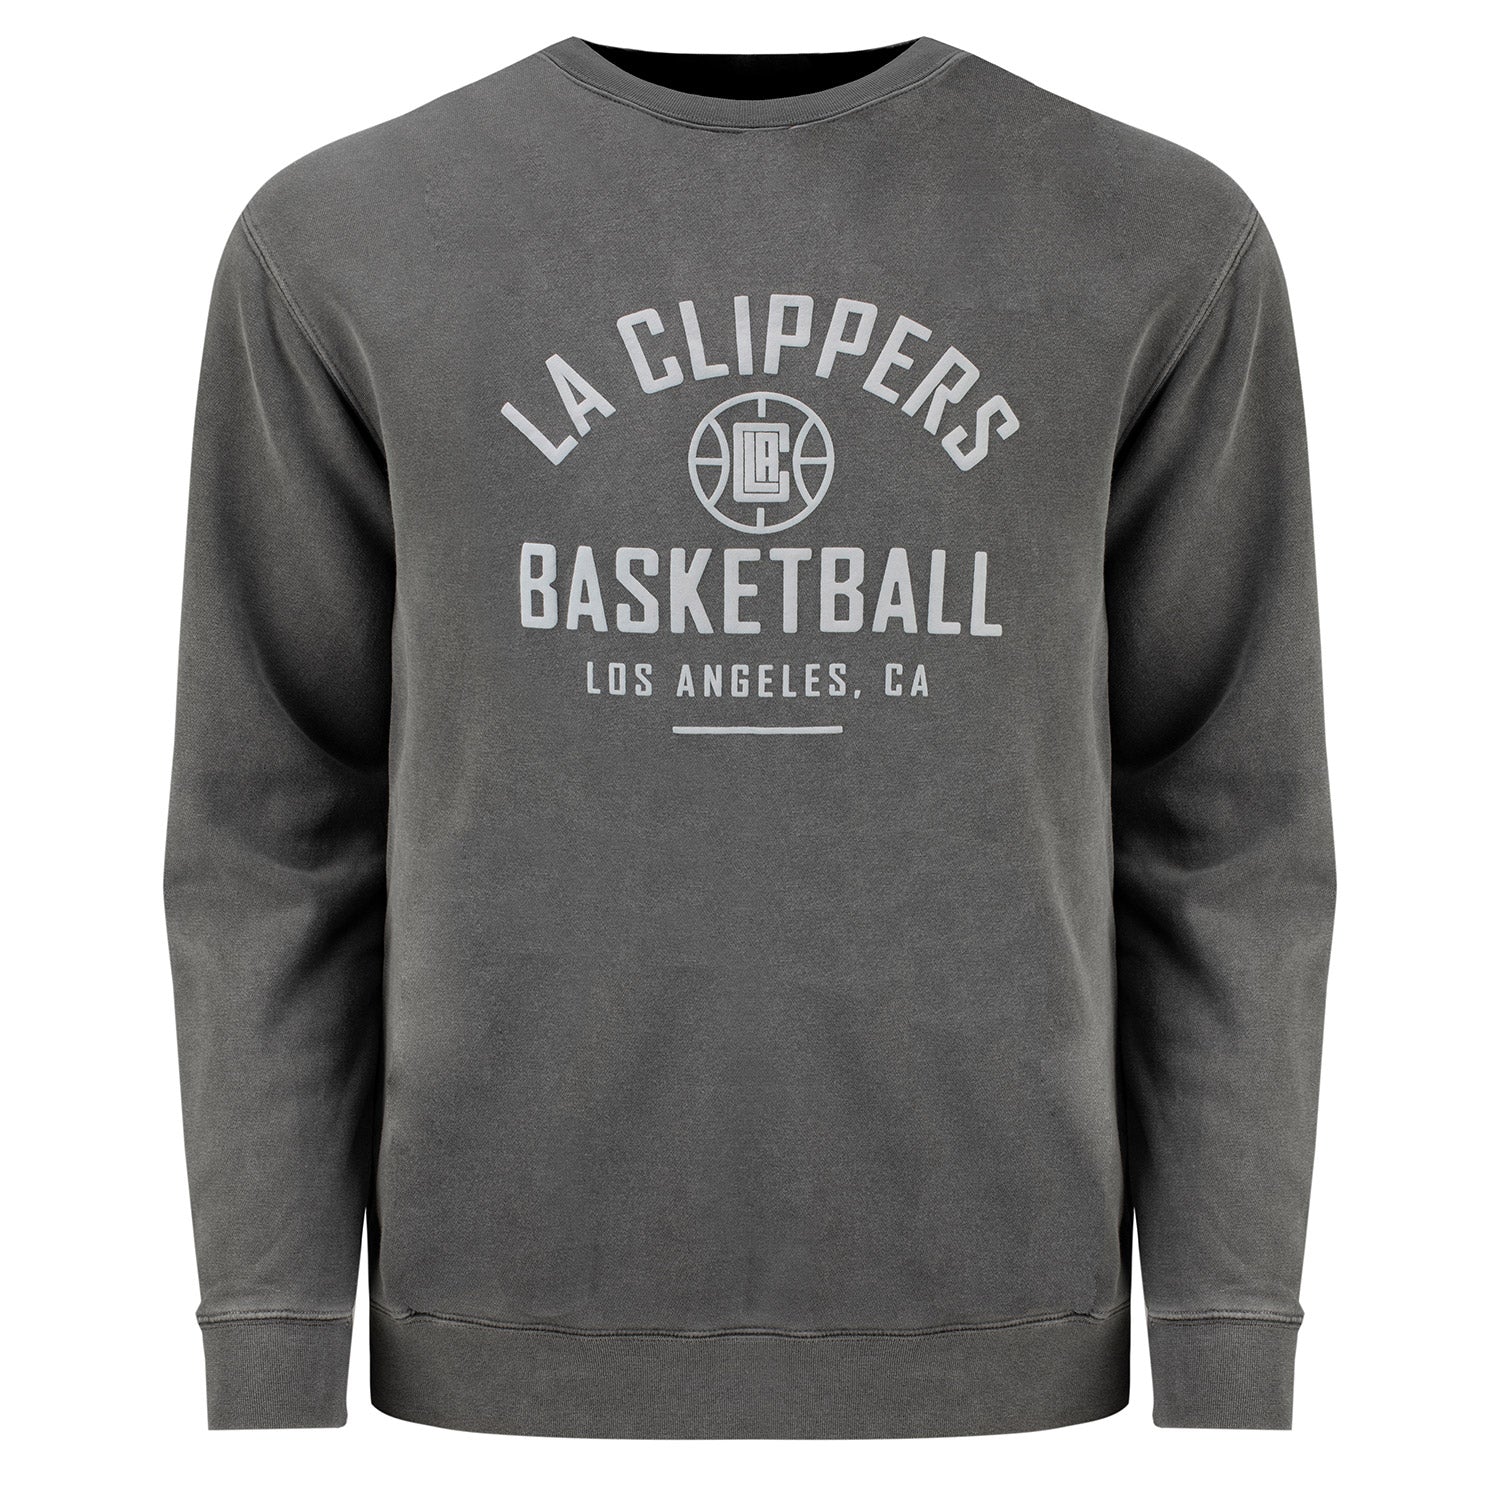 Lab Collection La Clippers La Clippers Basketball Vintage Black Tonal Crewneck Sweatshirt